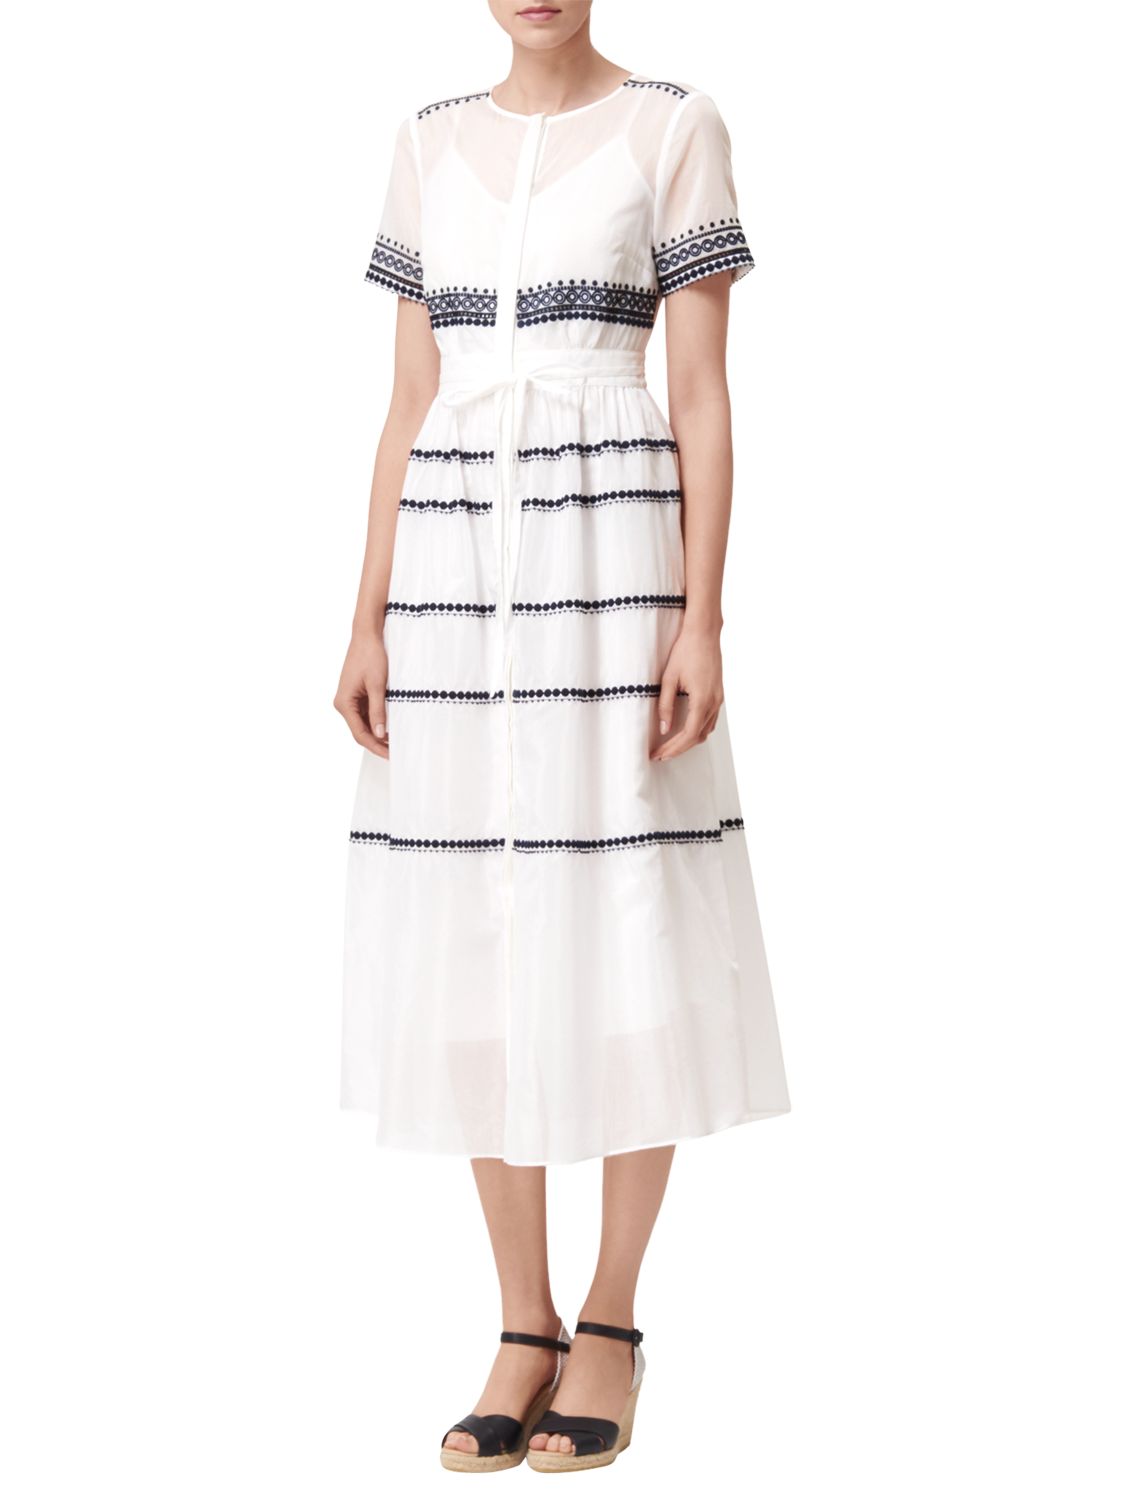 L.K. Bennett Tarley Embroidered Dress, Cream, 16